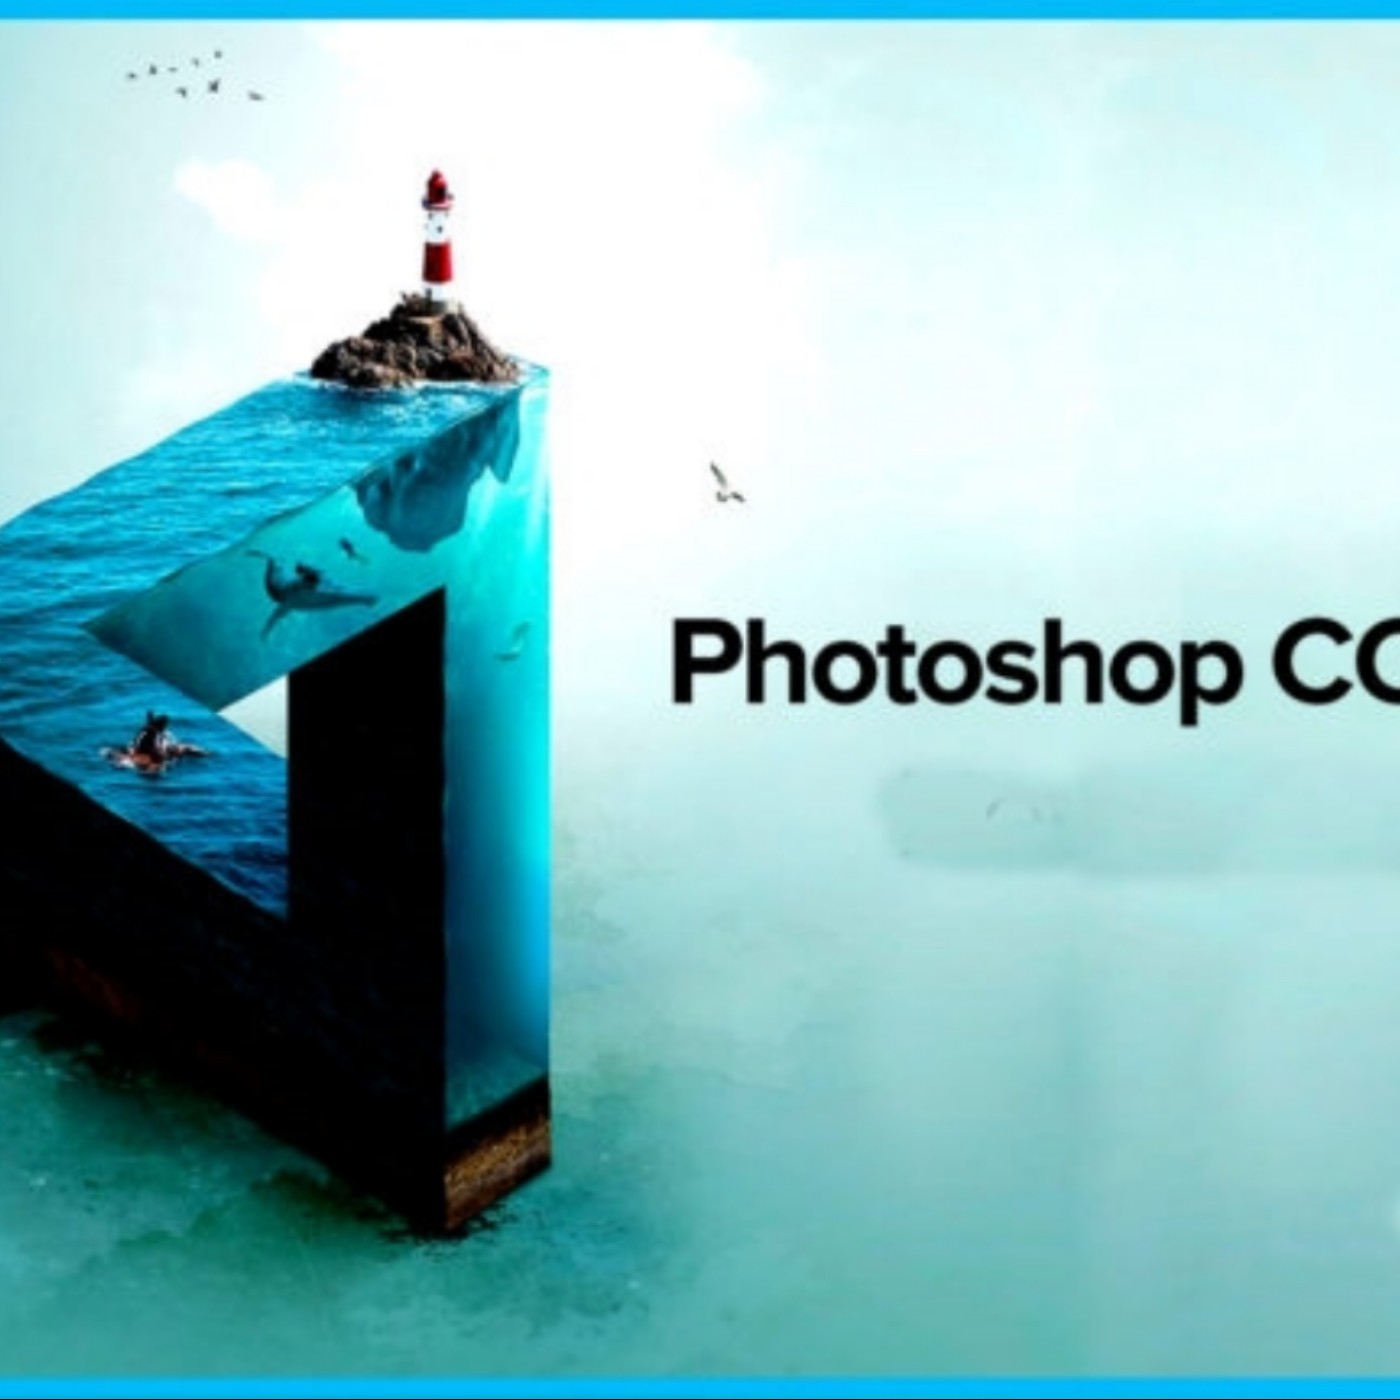 Download Free Photoshop CC 2015 Version 17 Registration Code.